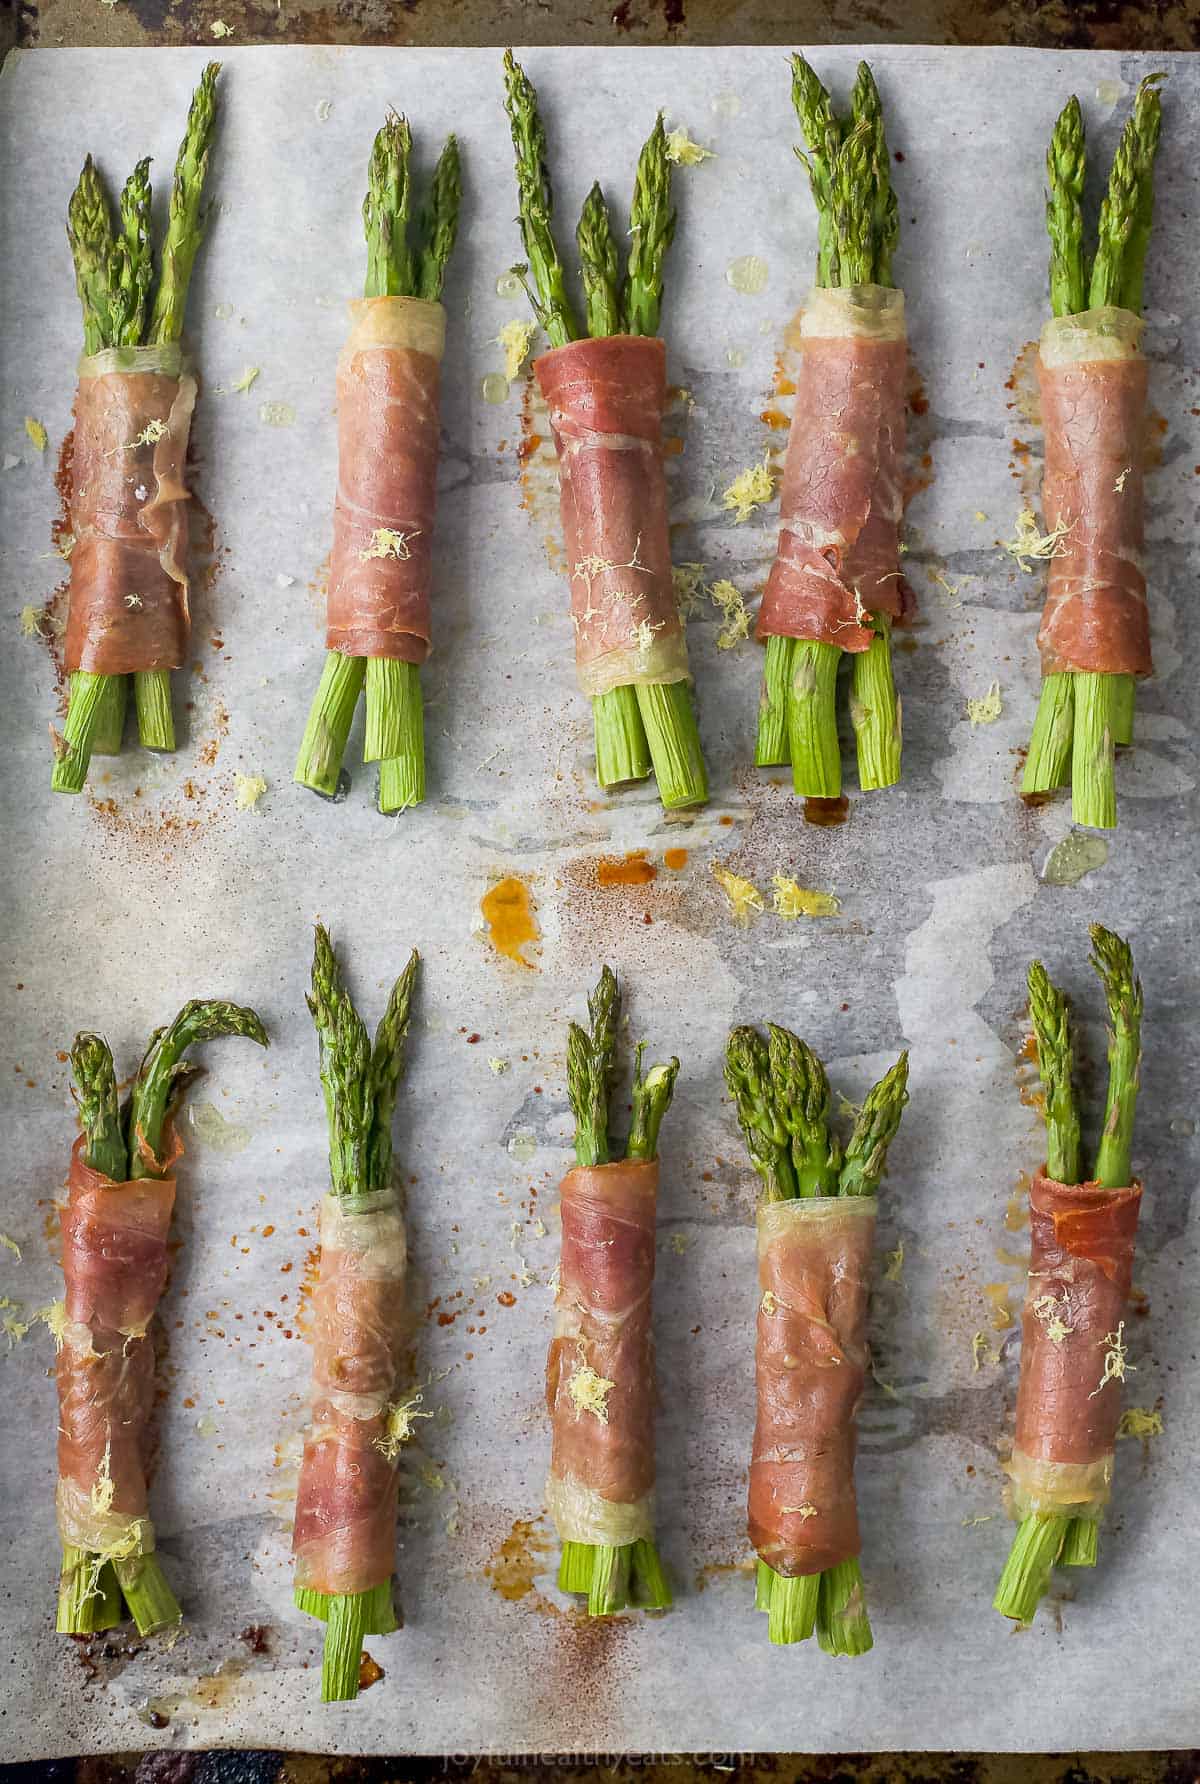 Ten baked asparagus bundles seasoned with salt on a baking sheet